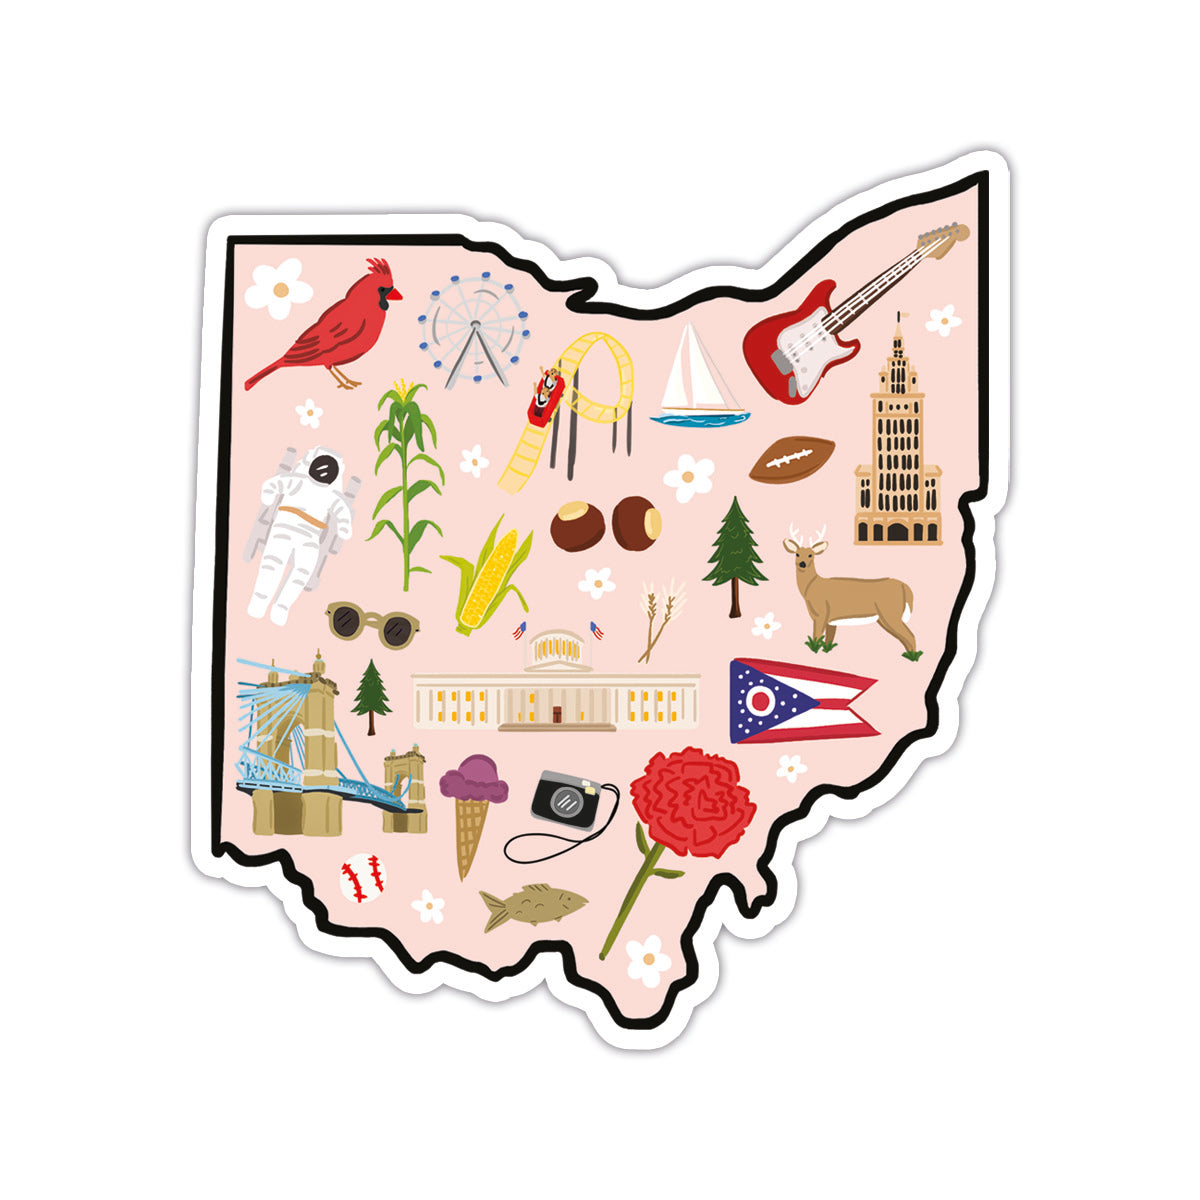 Ohio Sticker Fabric Graphics - 4 Pack - Reusable – Celebrate Local